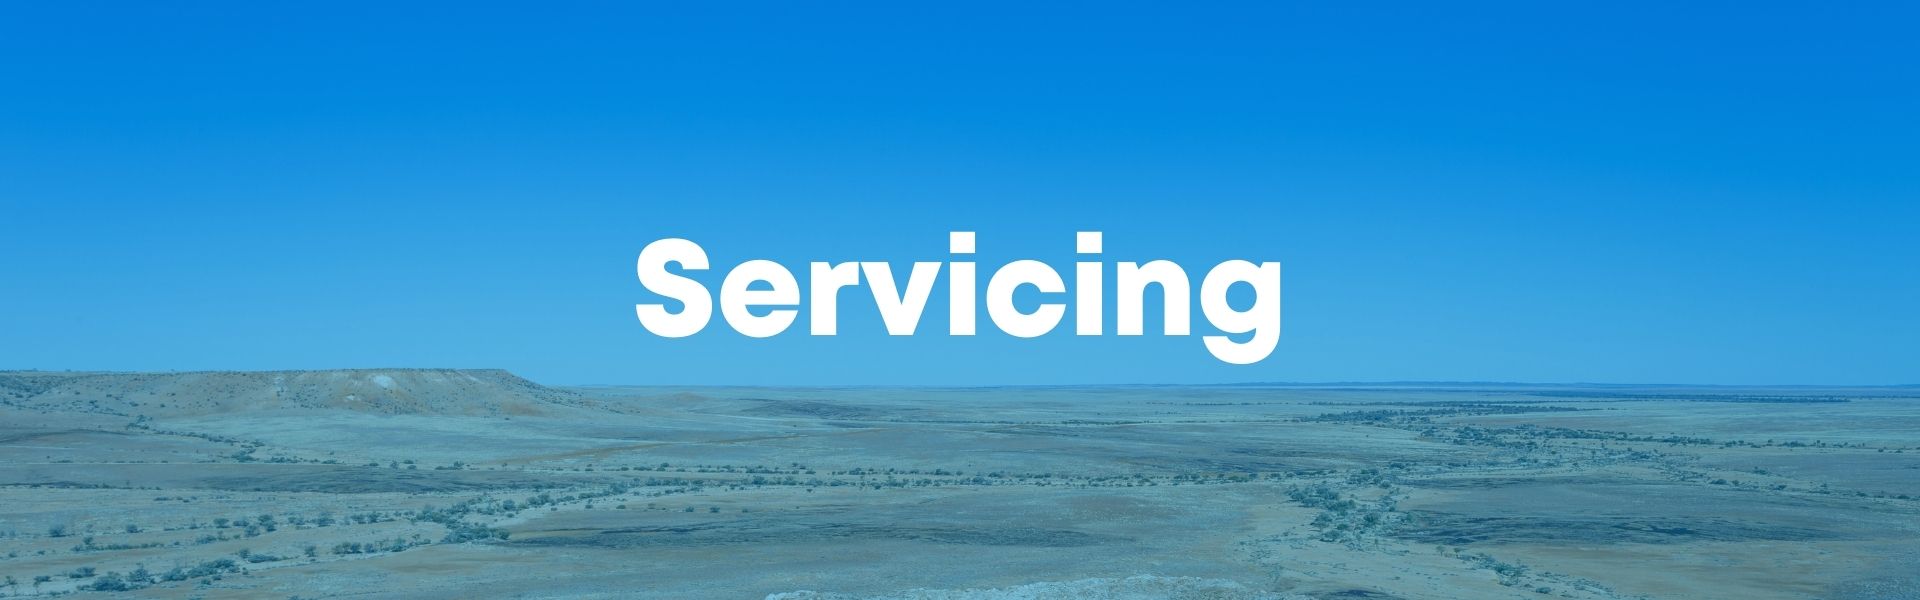 RV Servicing, Motorhome Servicing sydney, Campervan servicing sydney, Caravan servicing sydney, Camper trailer servicing sydney